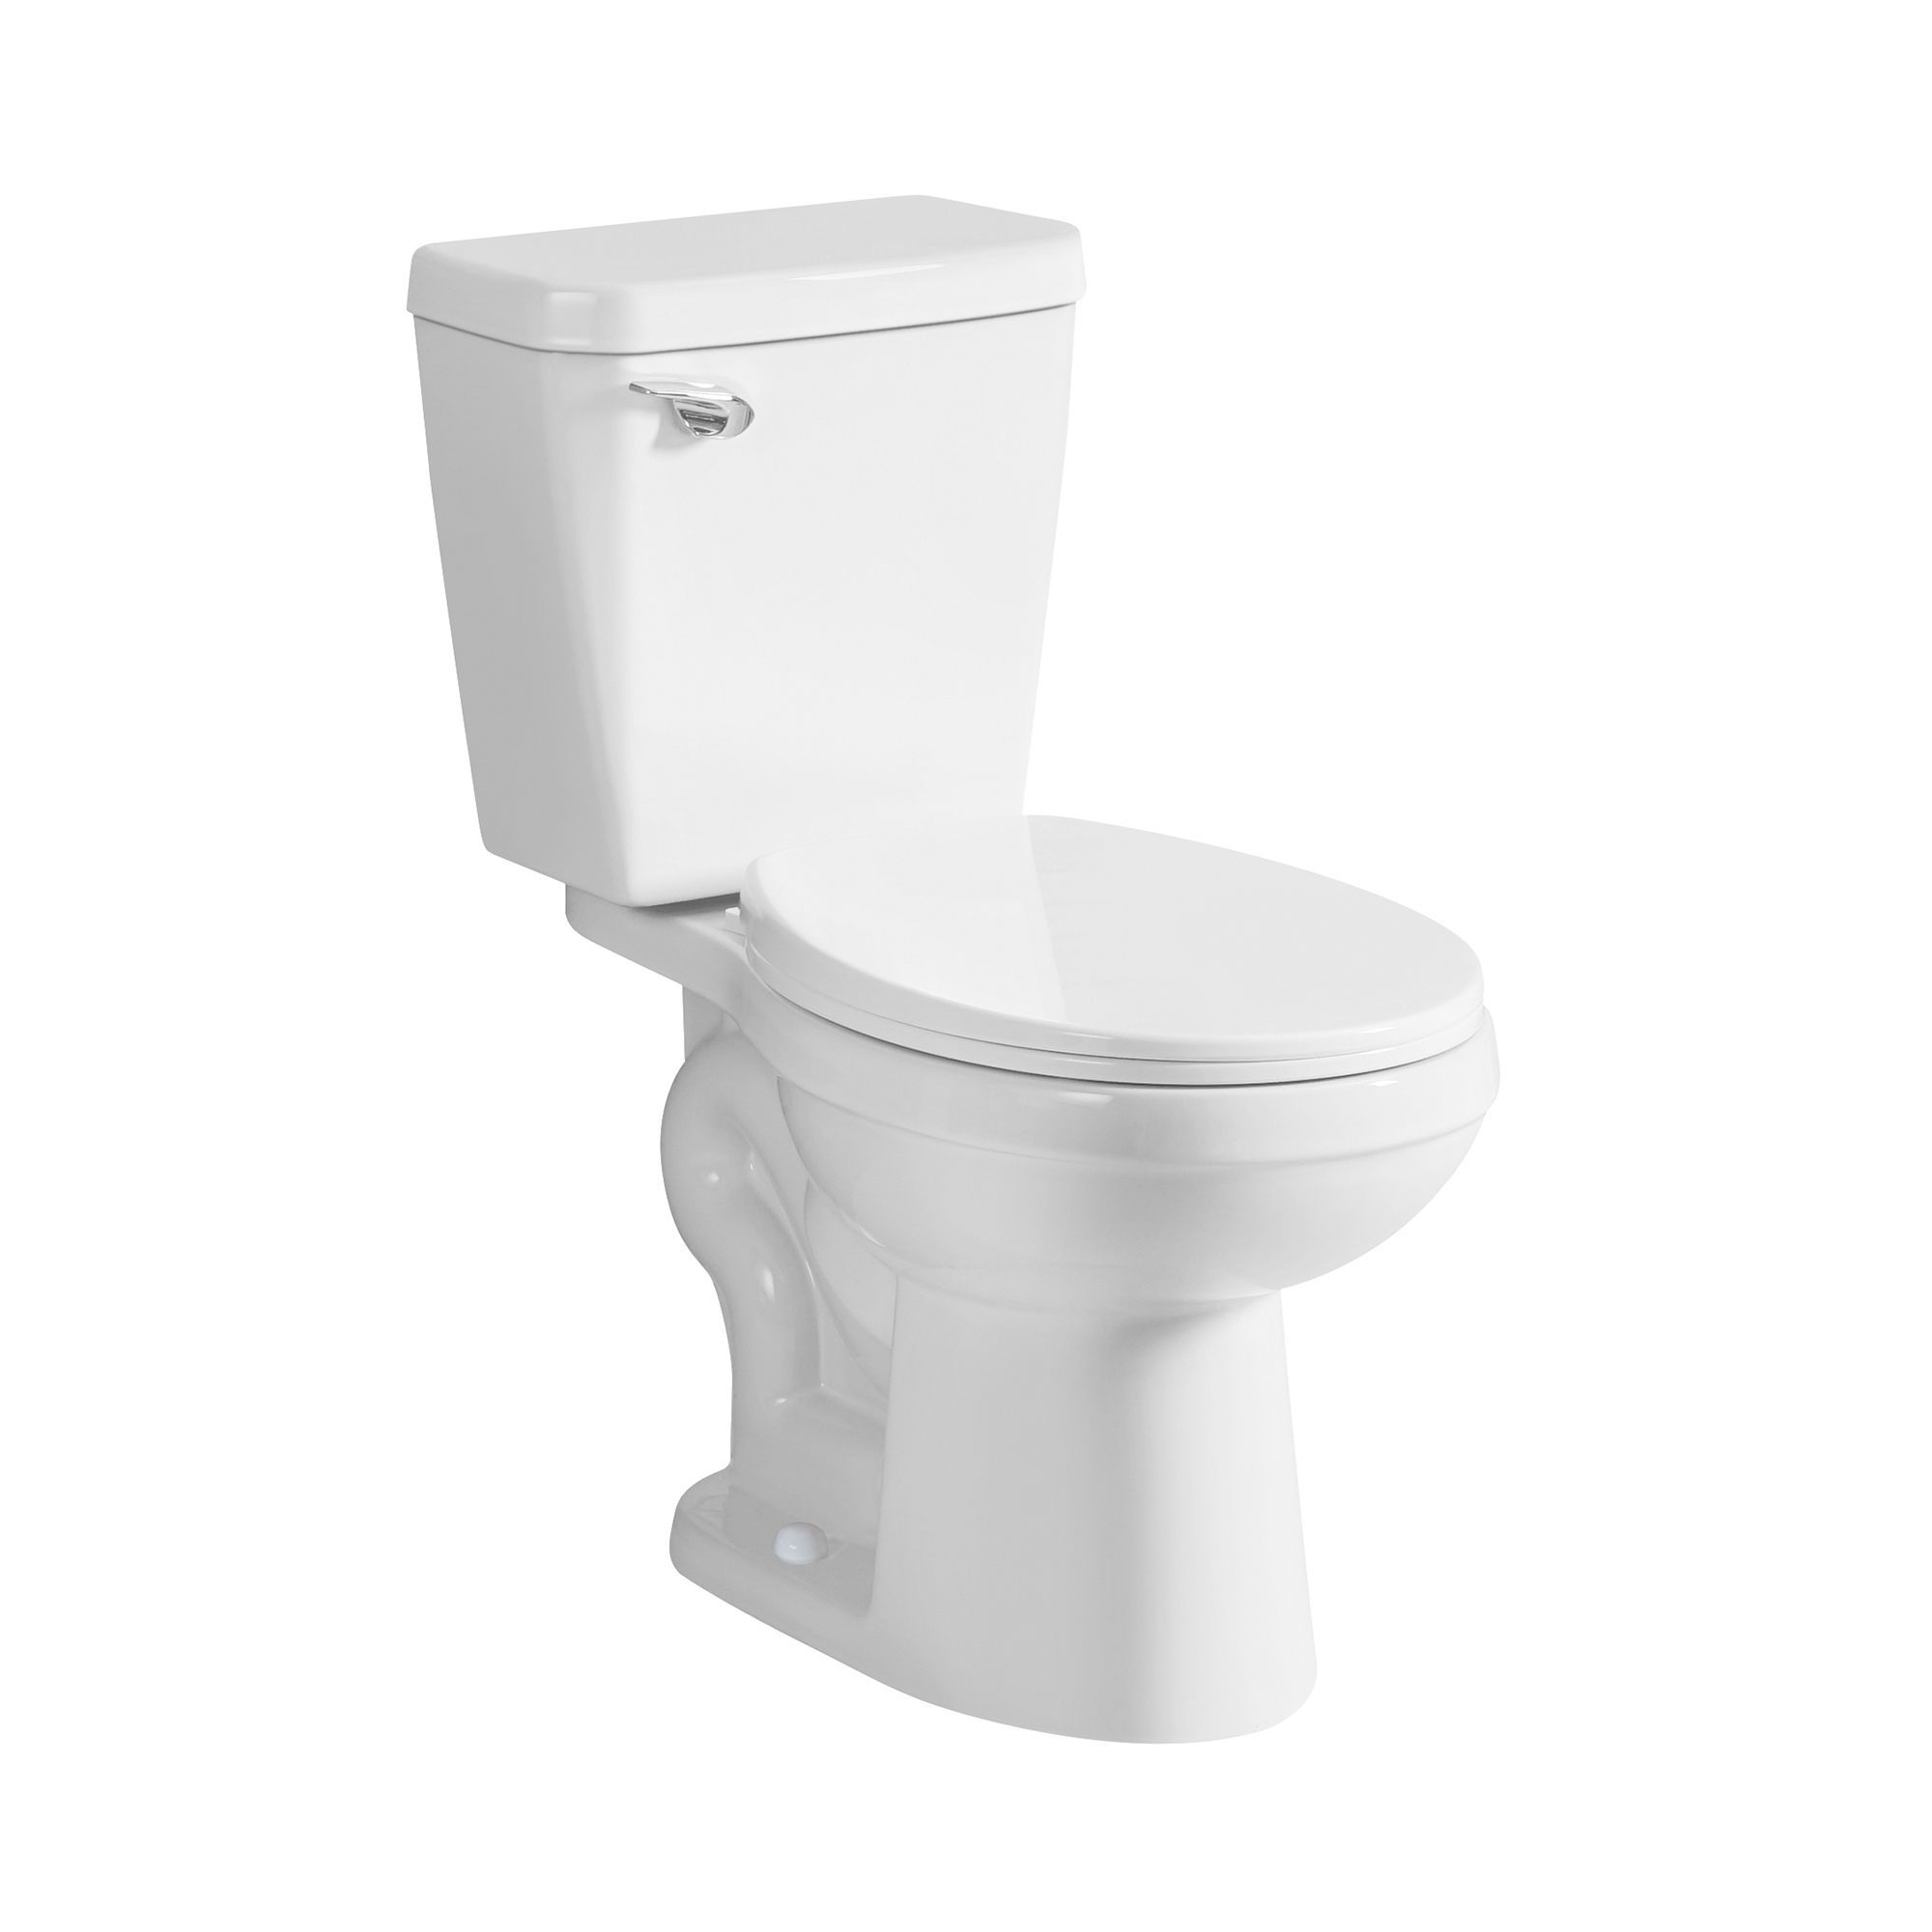 Toilette à cuvette allongée Delta Prelude, certifiée WaterSense